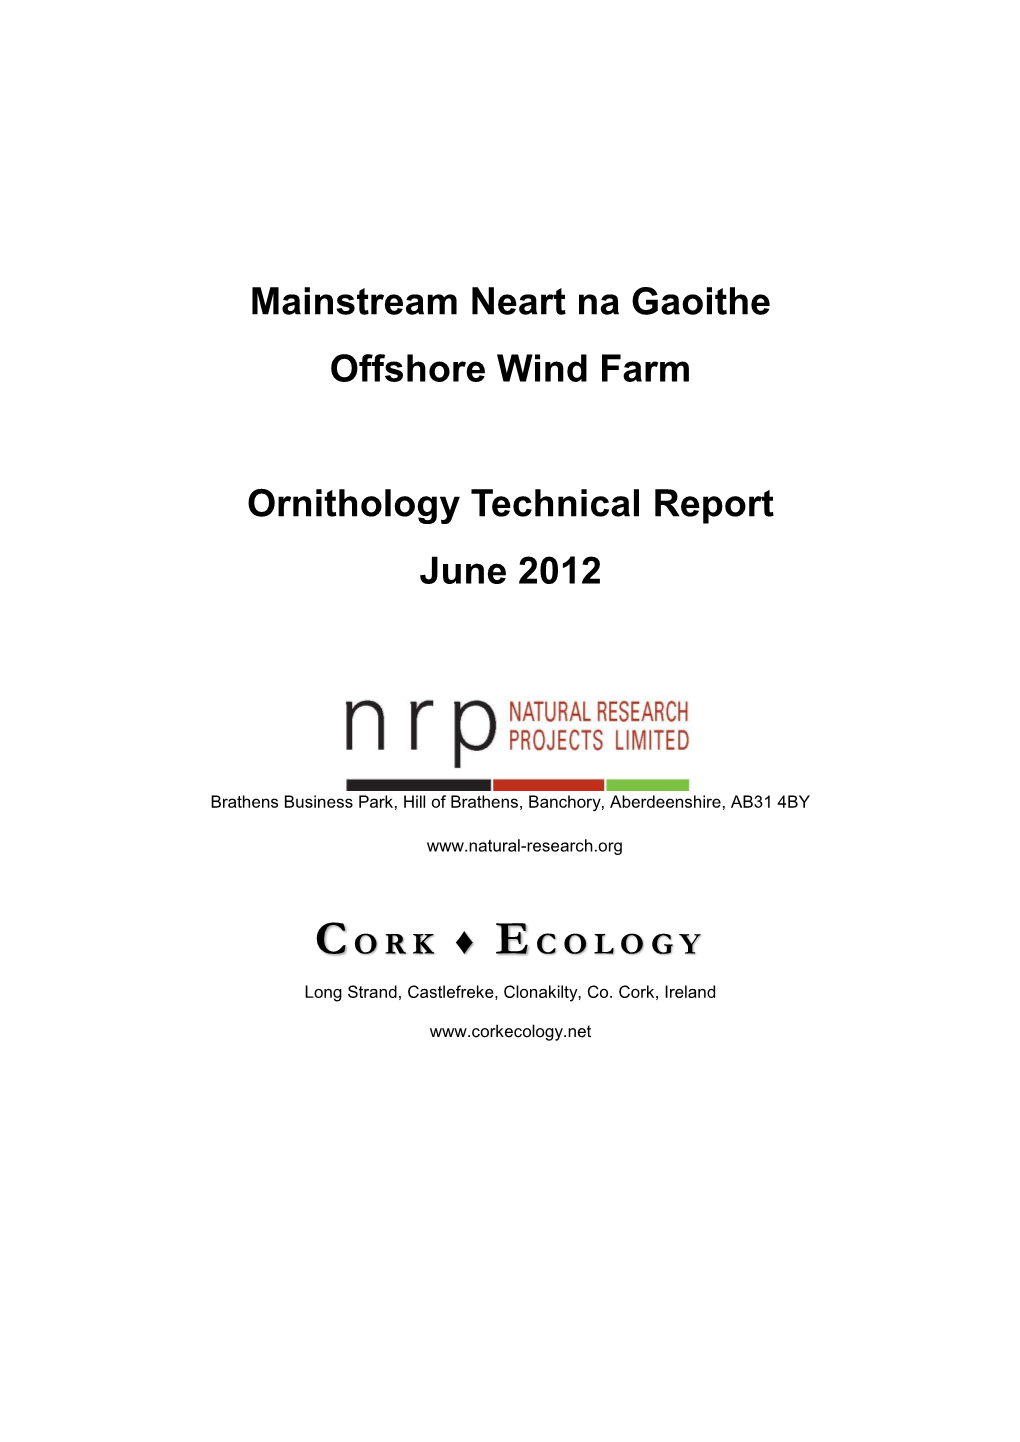 Mainstream Neart Na Gaoithe Offshore Wind Farm Ornithology Technical